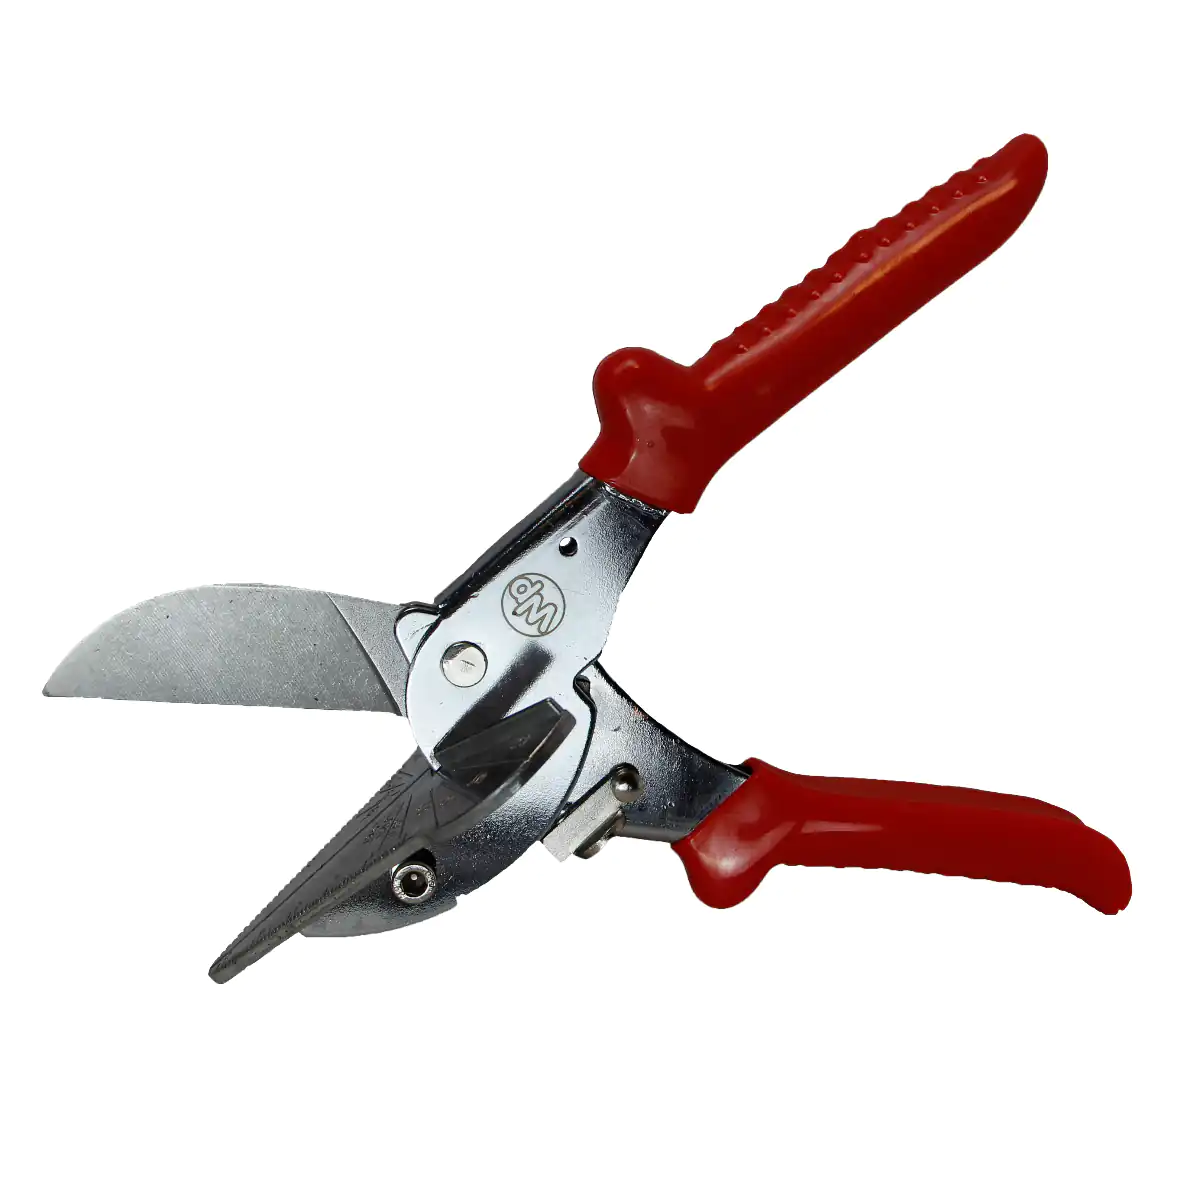 Solid Blade Gasket Shears - Flexi Blade